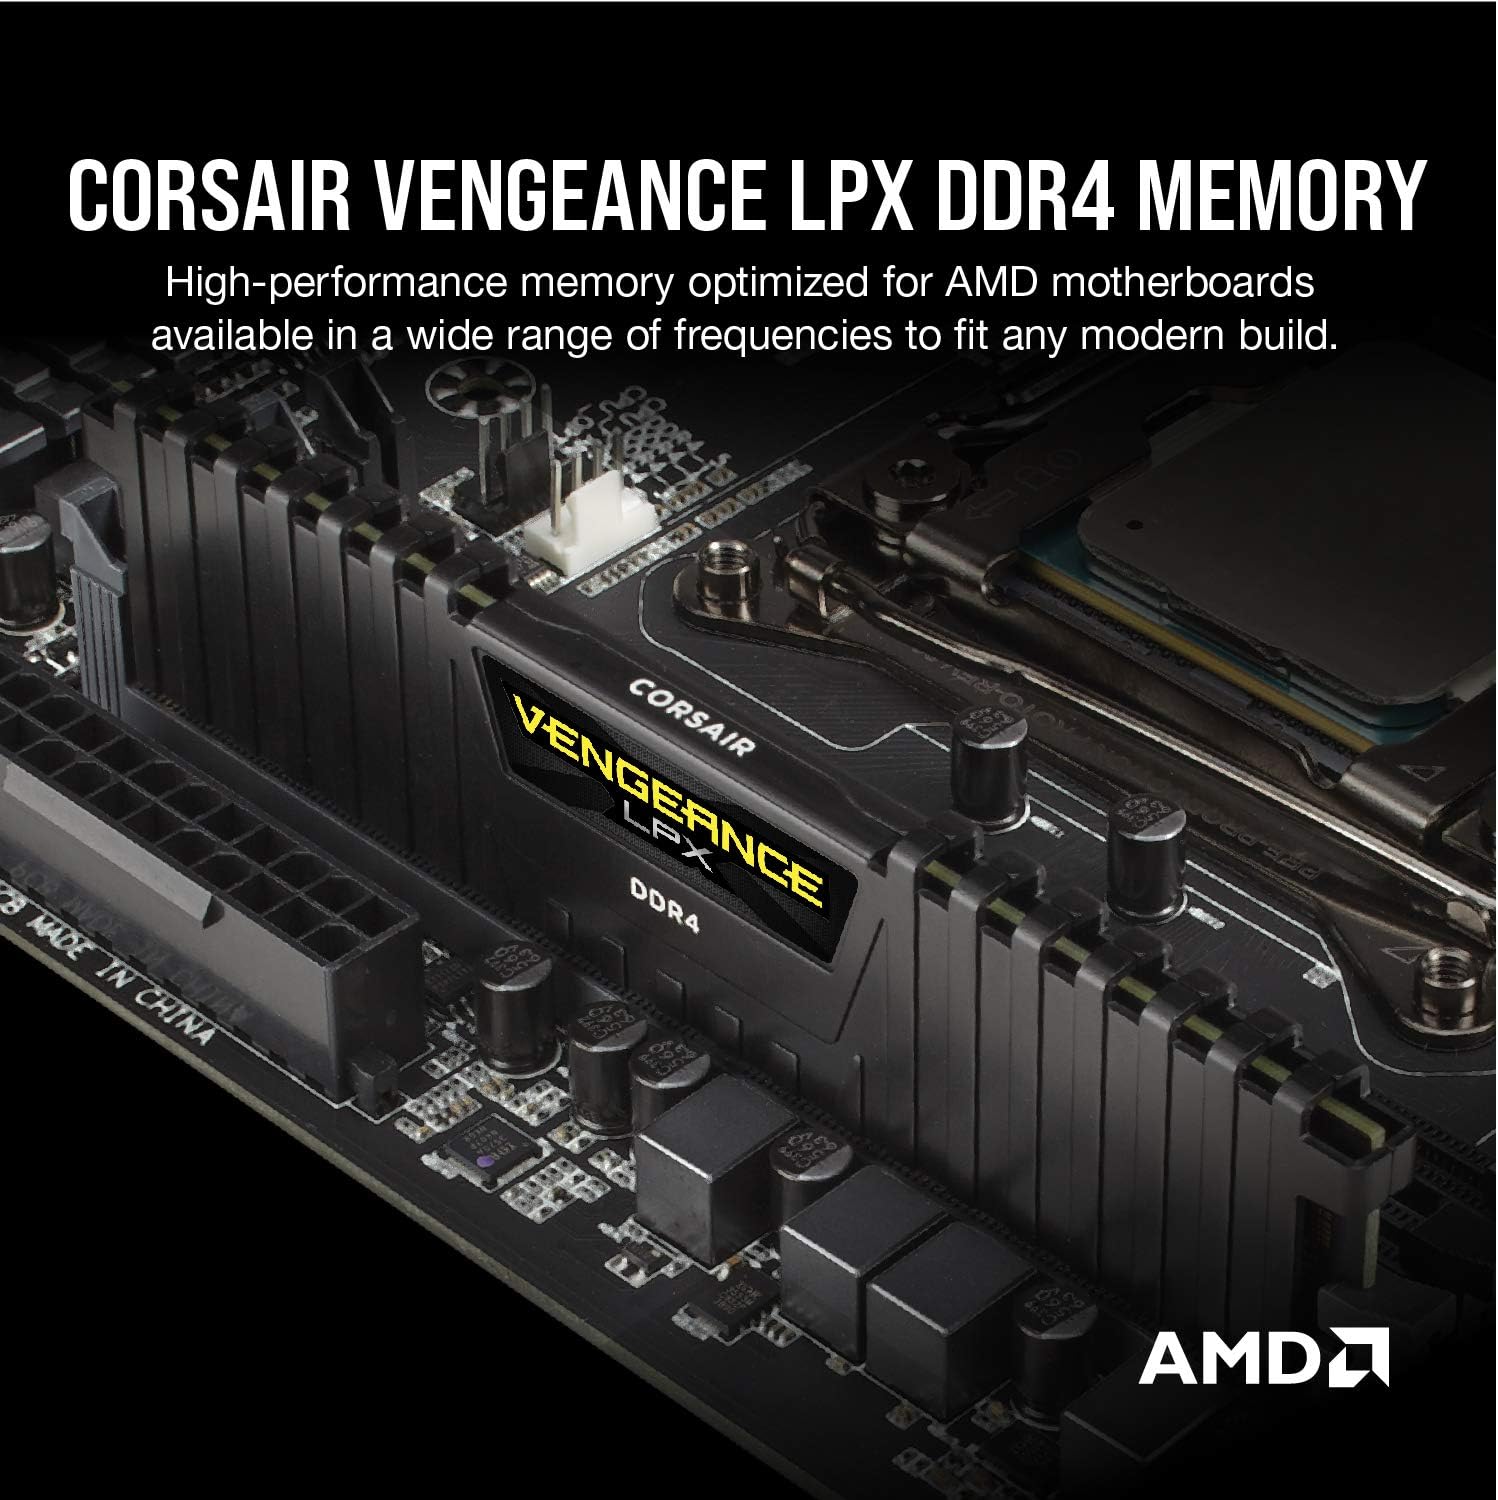 Corsair VENGEANCE LPX DDR4 64GB (2x32GB) 3200MHz CL16 Intel XMP 2.0 Computer Memory - Black (CMK64GX4M2E3200C16)